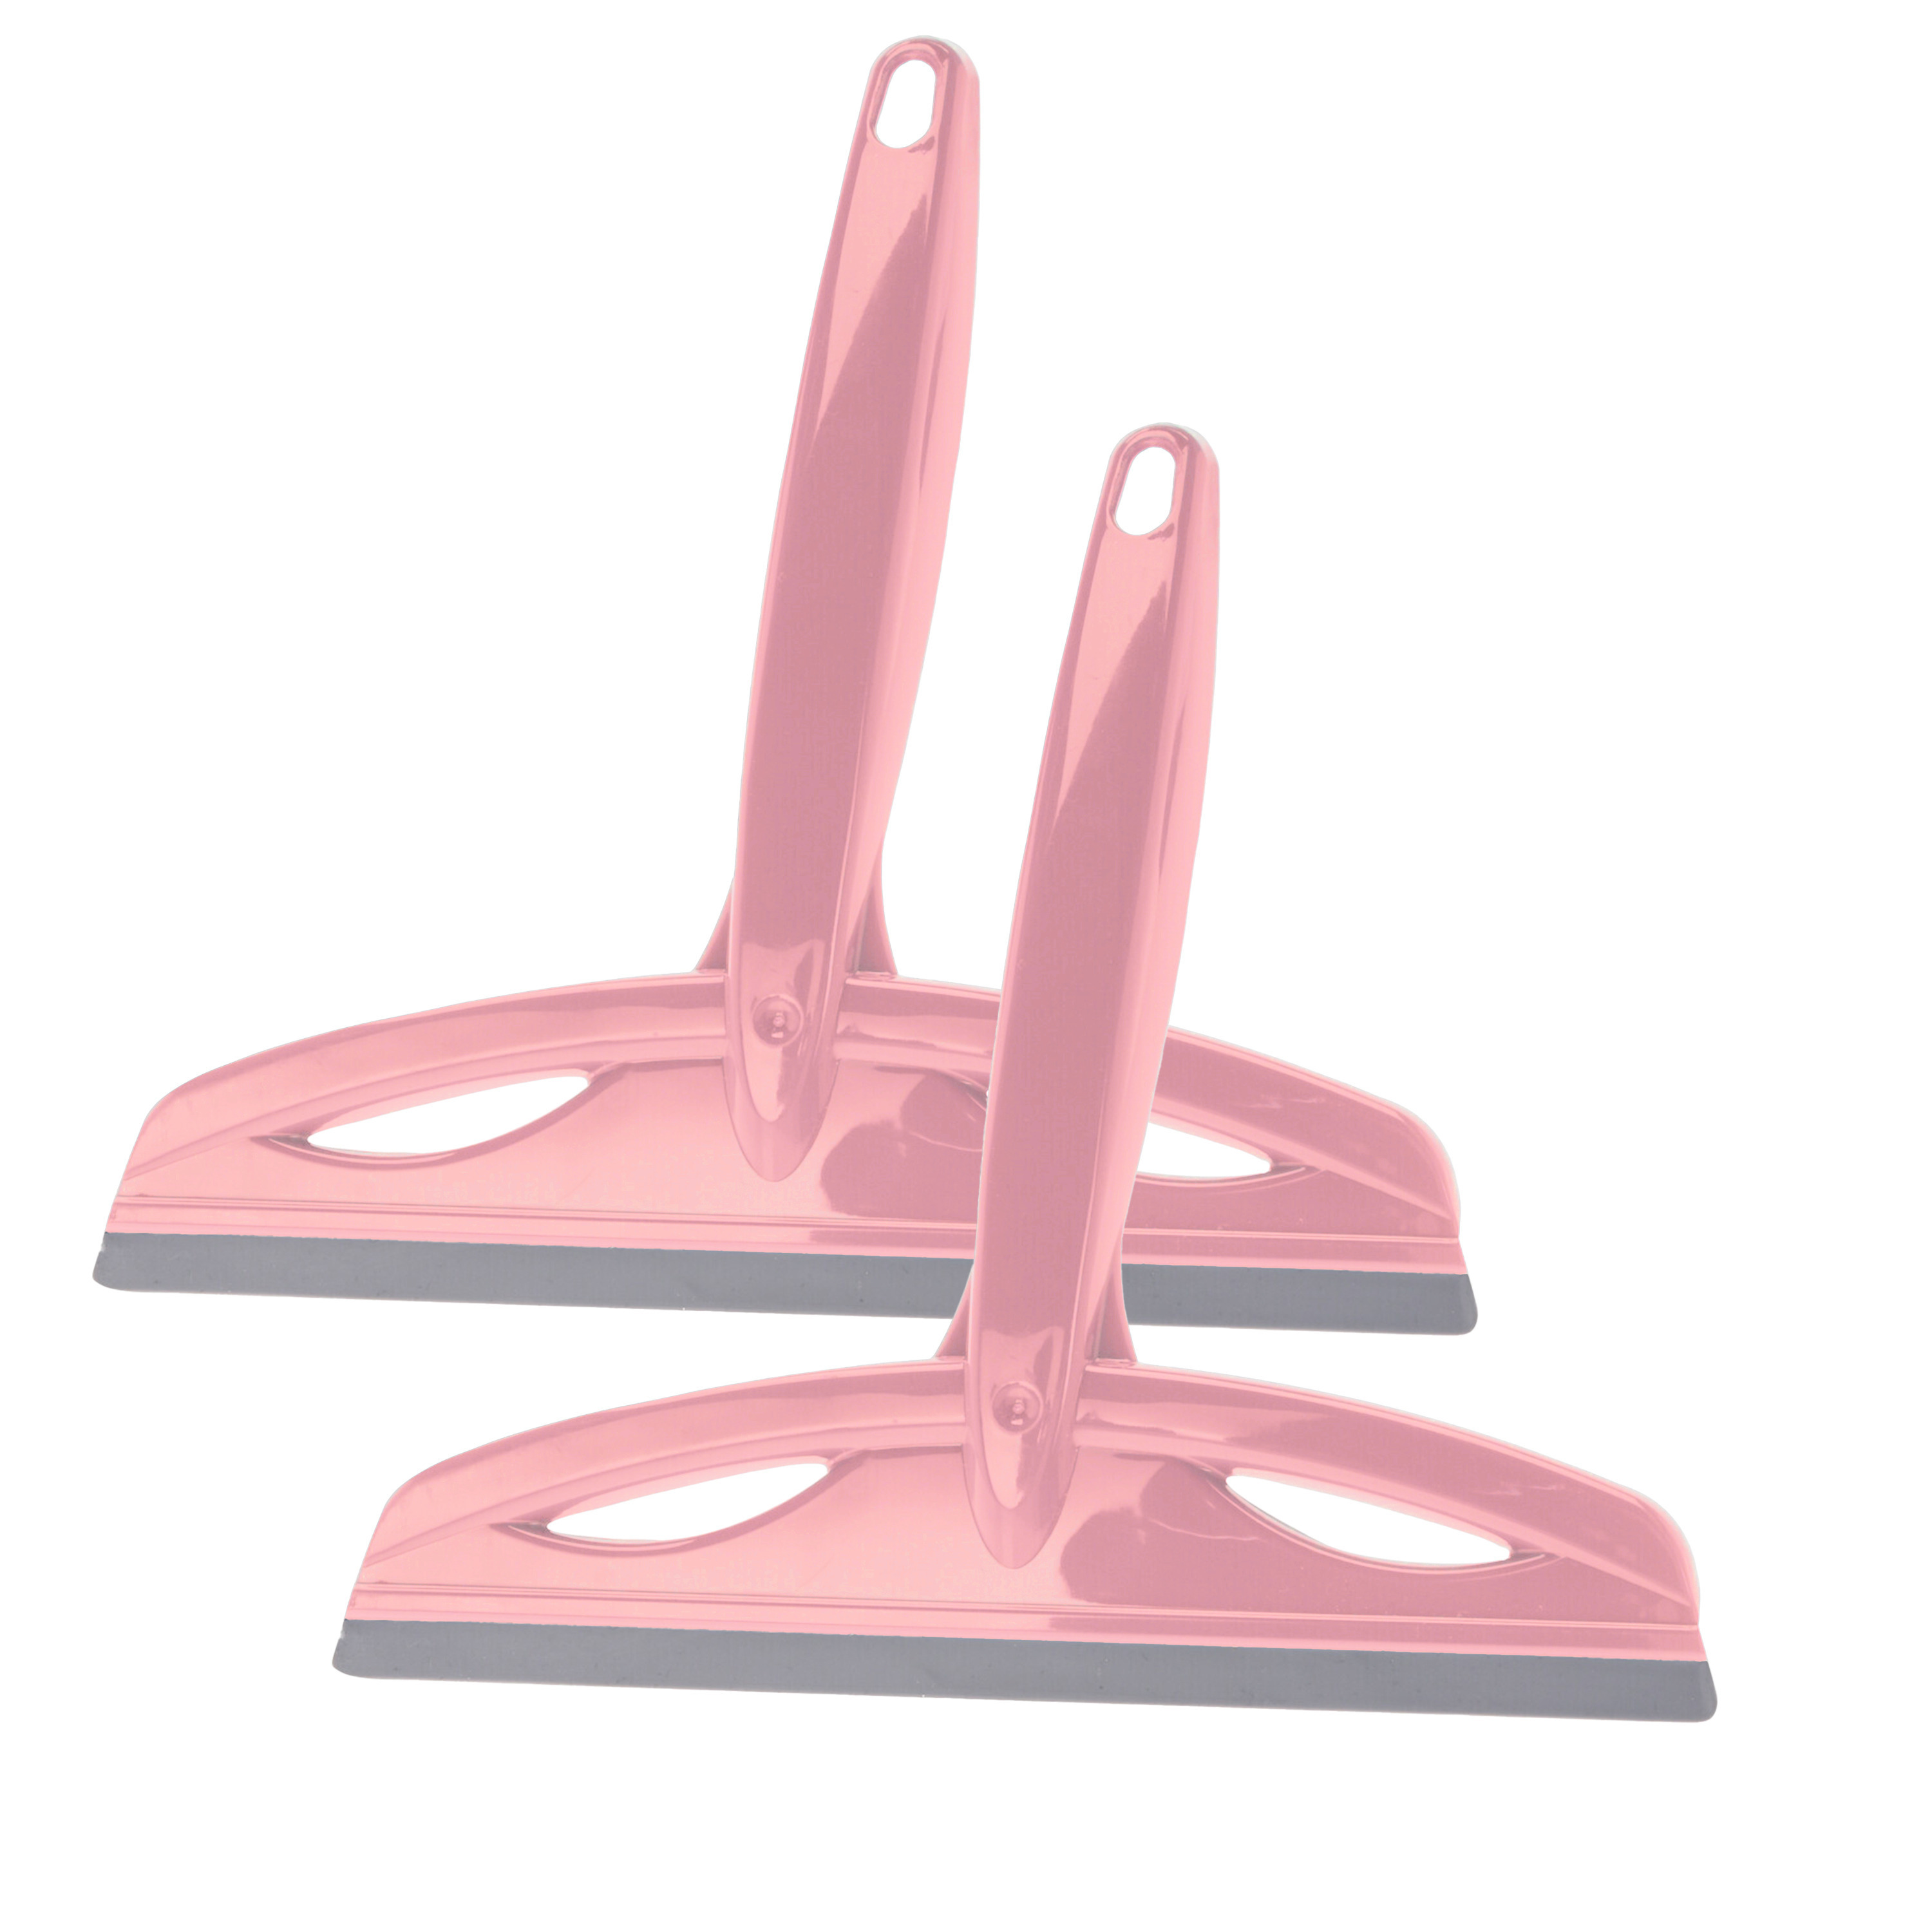 Douchewissers/raamwissers - 2 stuks - roze - 20 cm